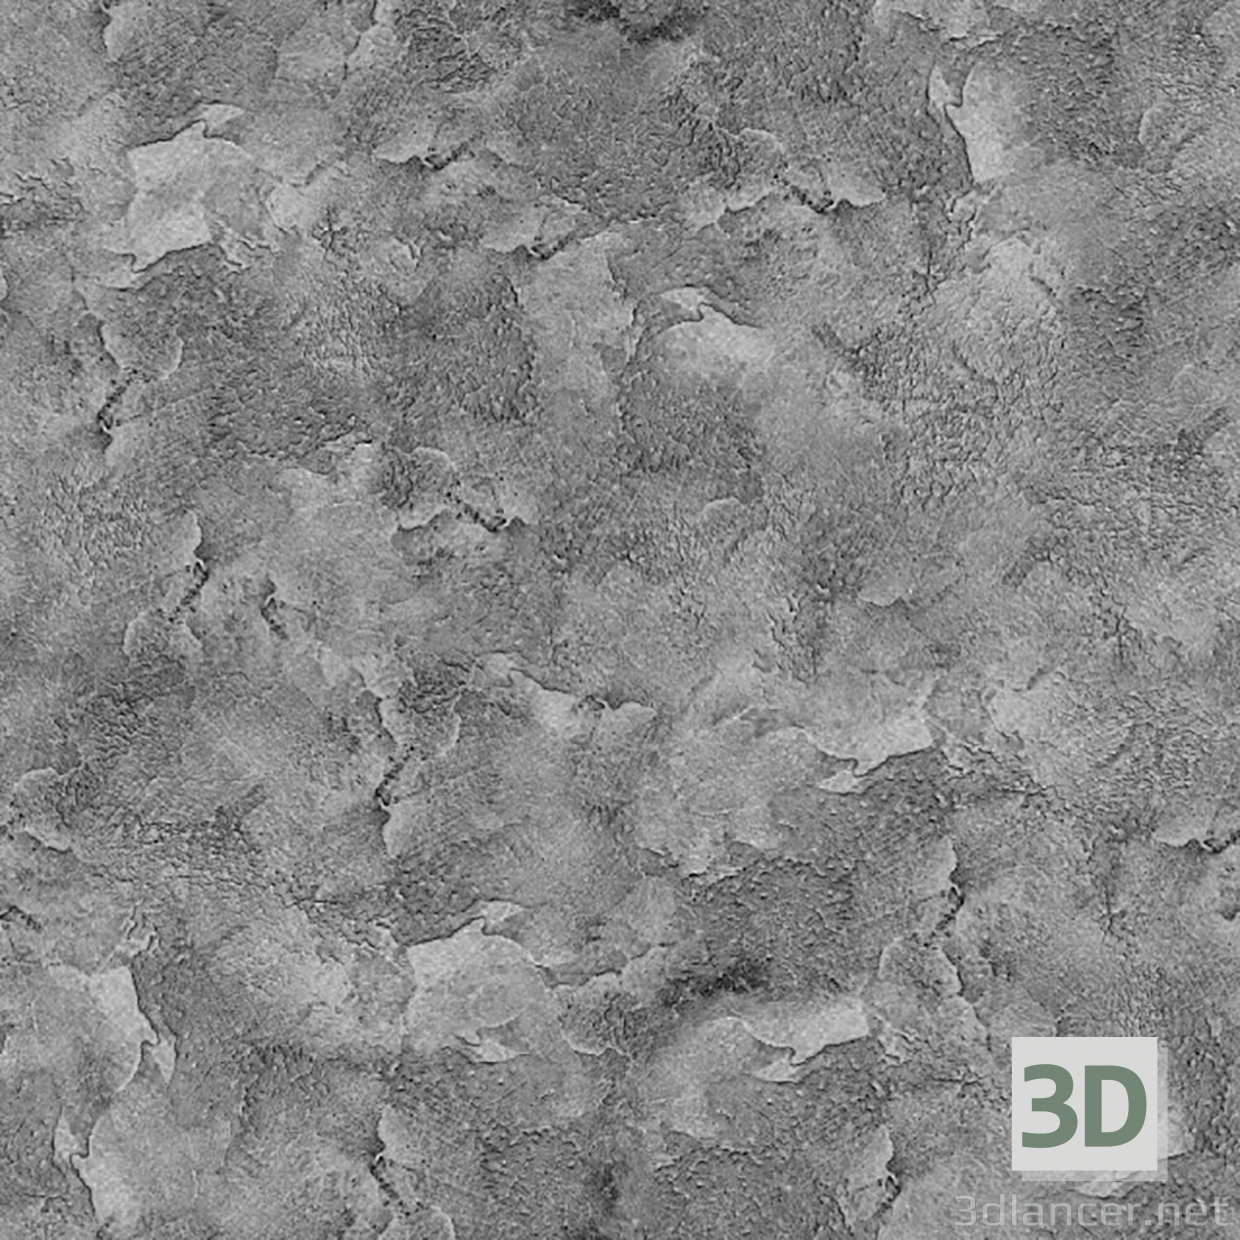 Texture Alaska bump plaster free download - image